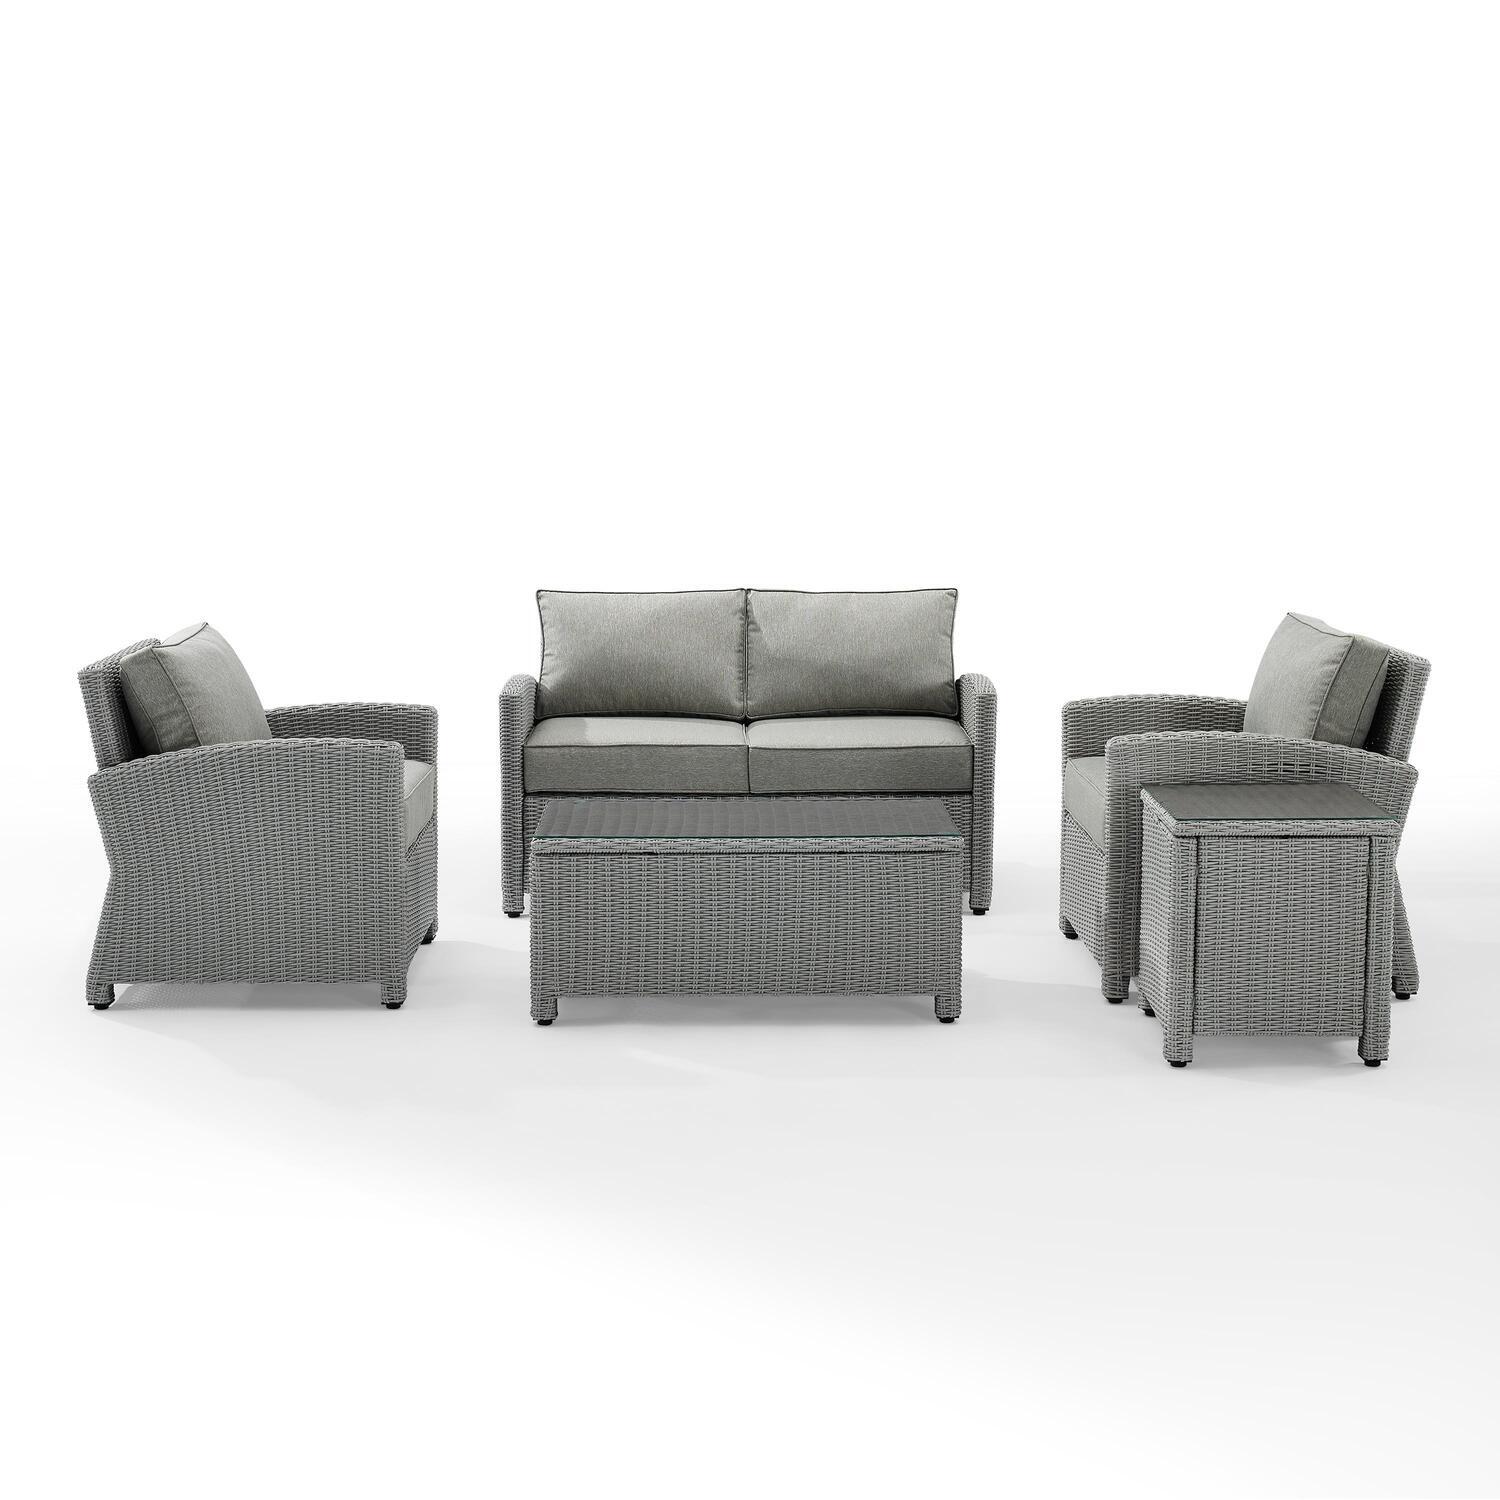 Crosley Bradenton 5 Piece Wicker Patio Sofa Set in Gray - image 1 of 7